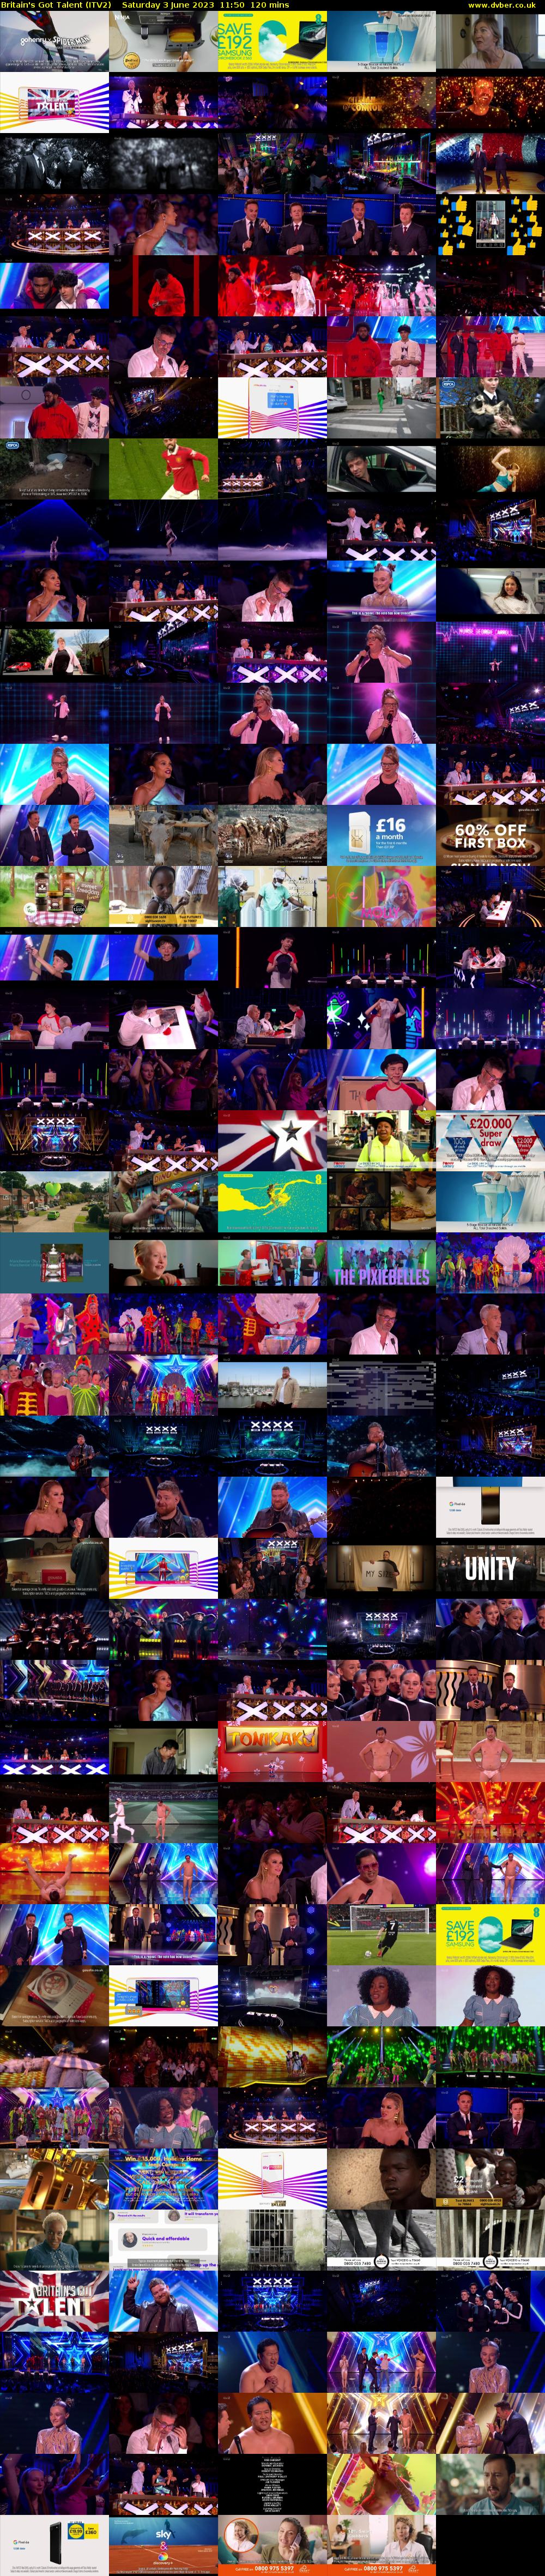 Britain's Got Talent (ITV2) Saturday 3 June 2023 11:50 - 13:50